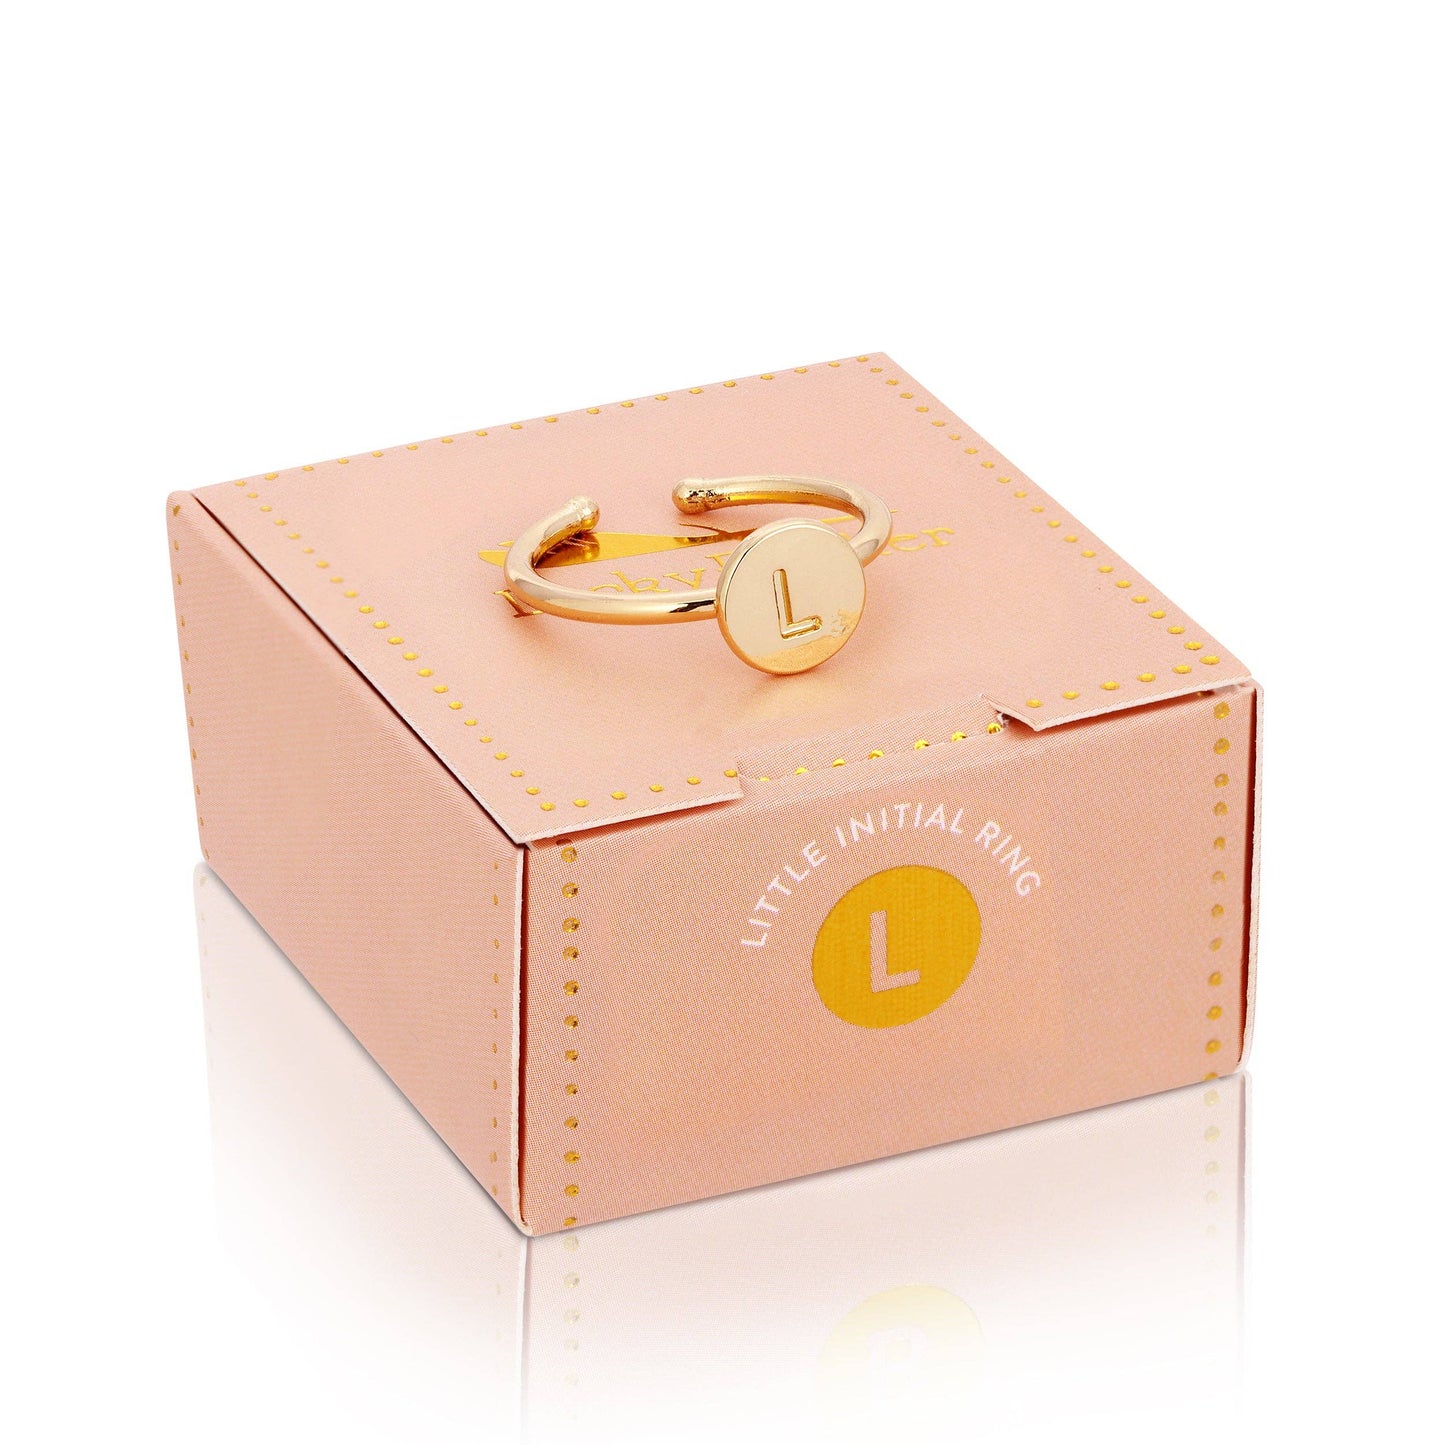 Initial Ring Ring - small box - L